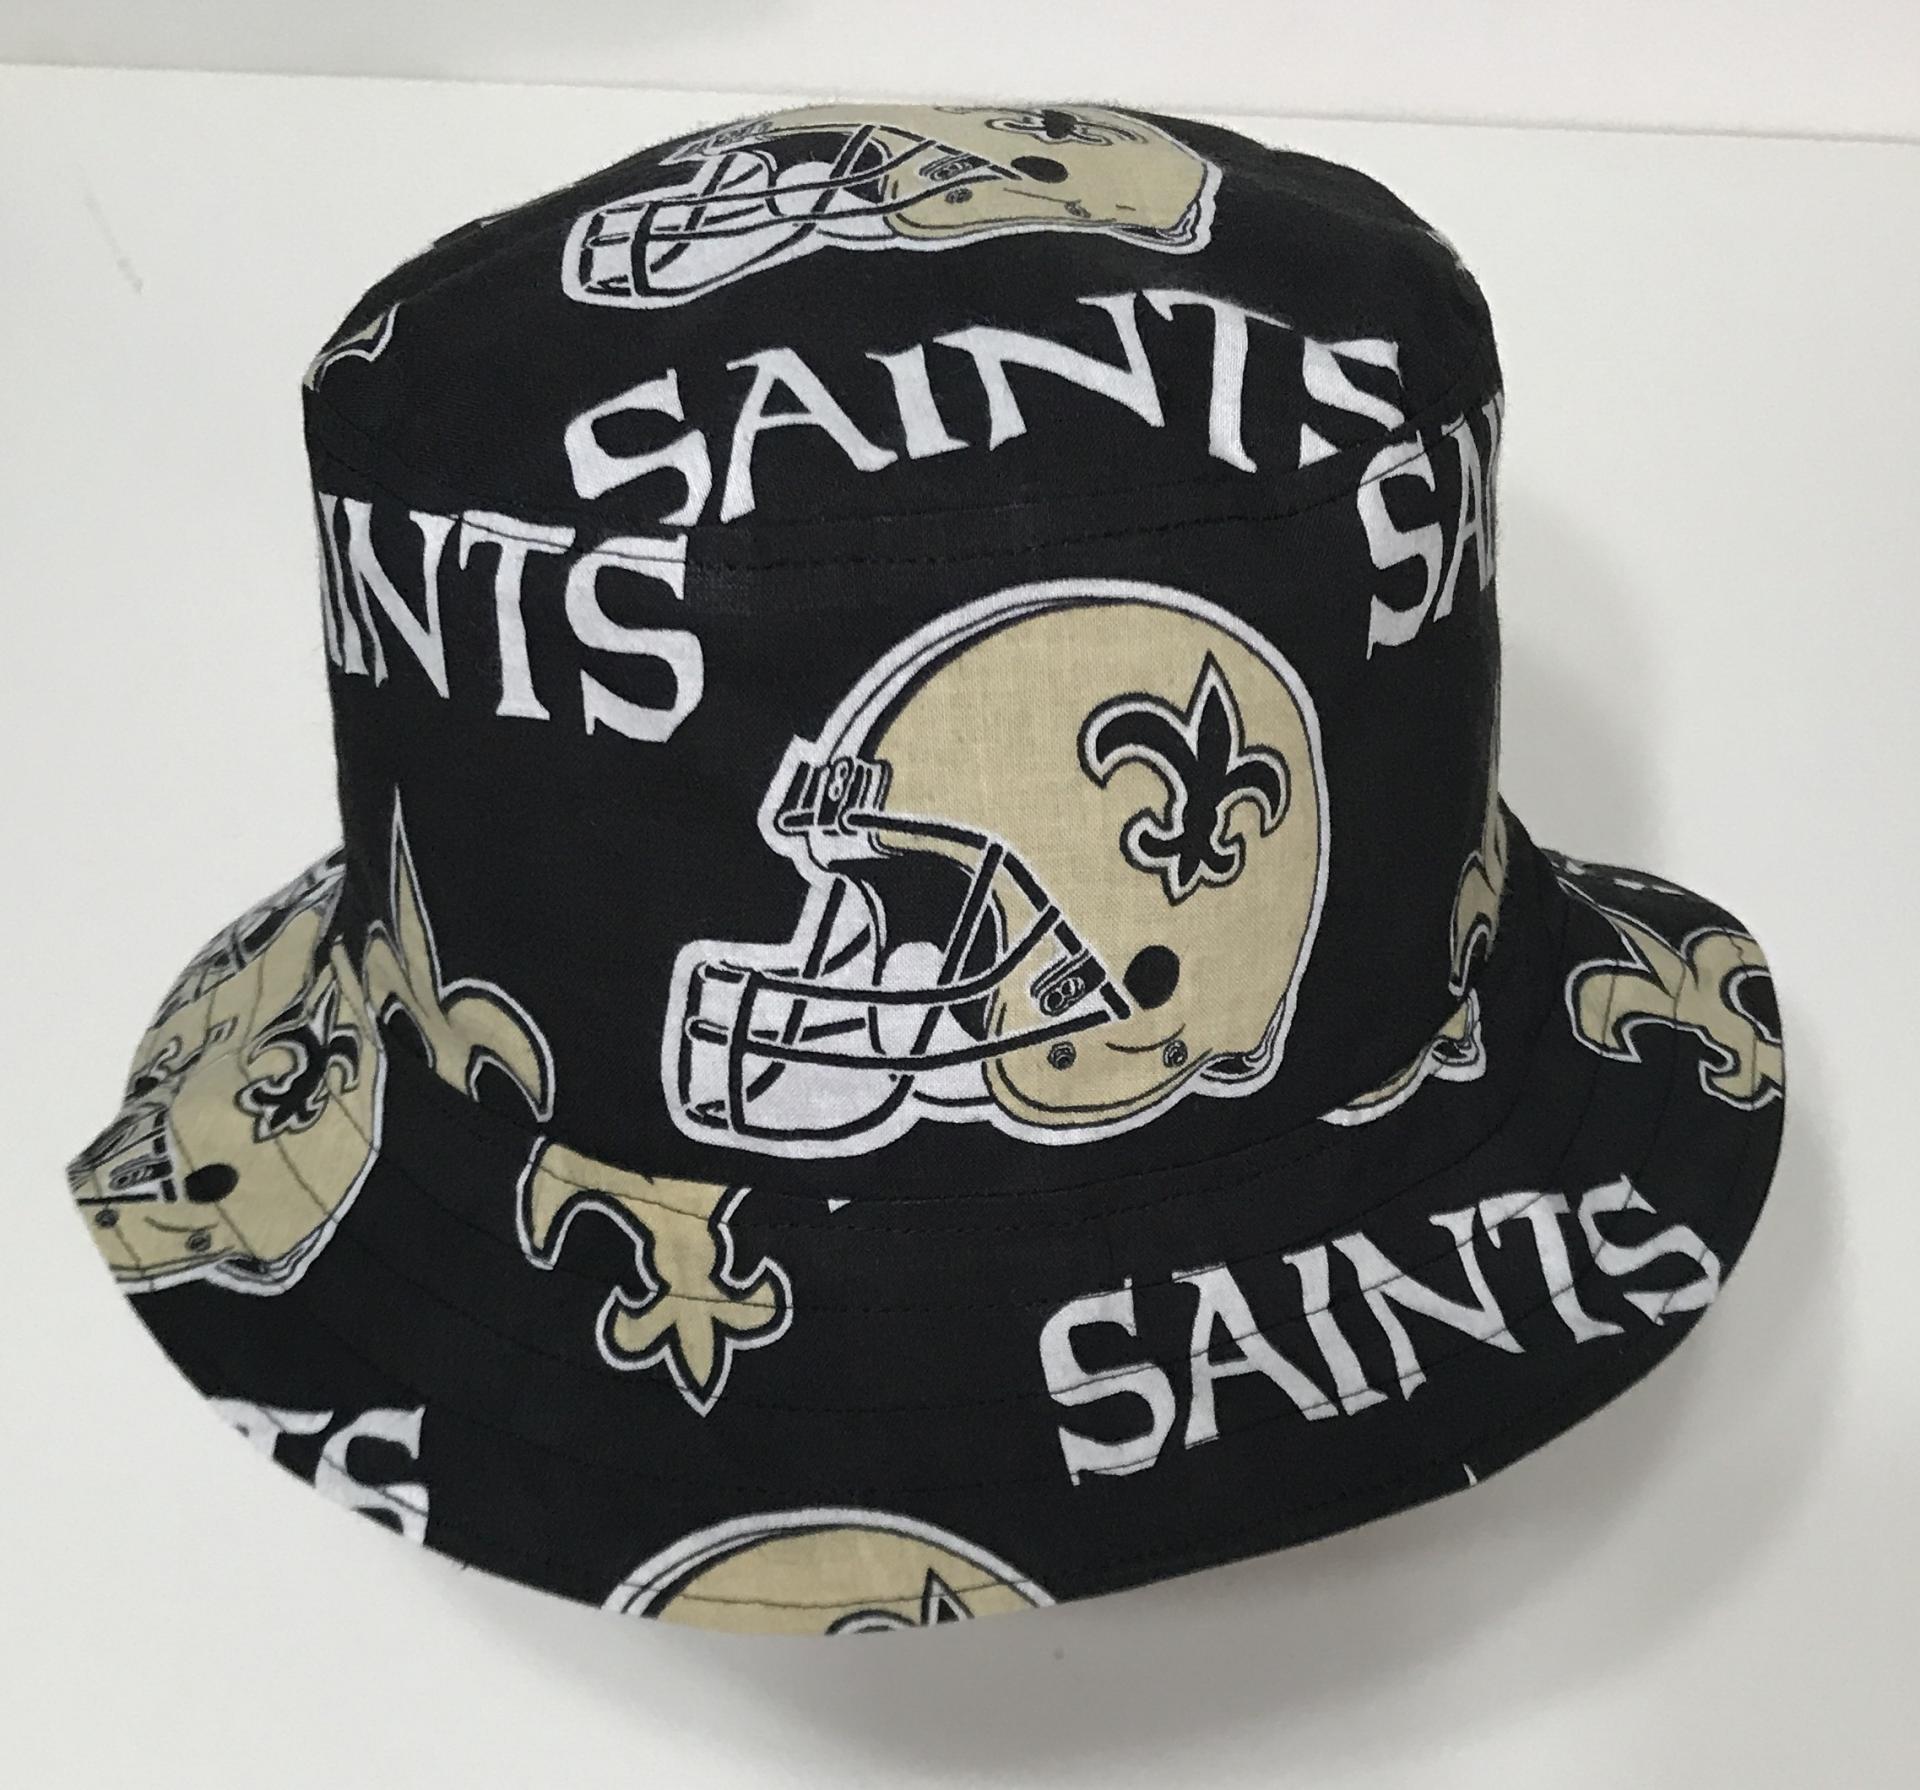 New Orleans Saints bucket hat, front/top view